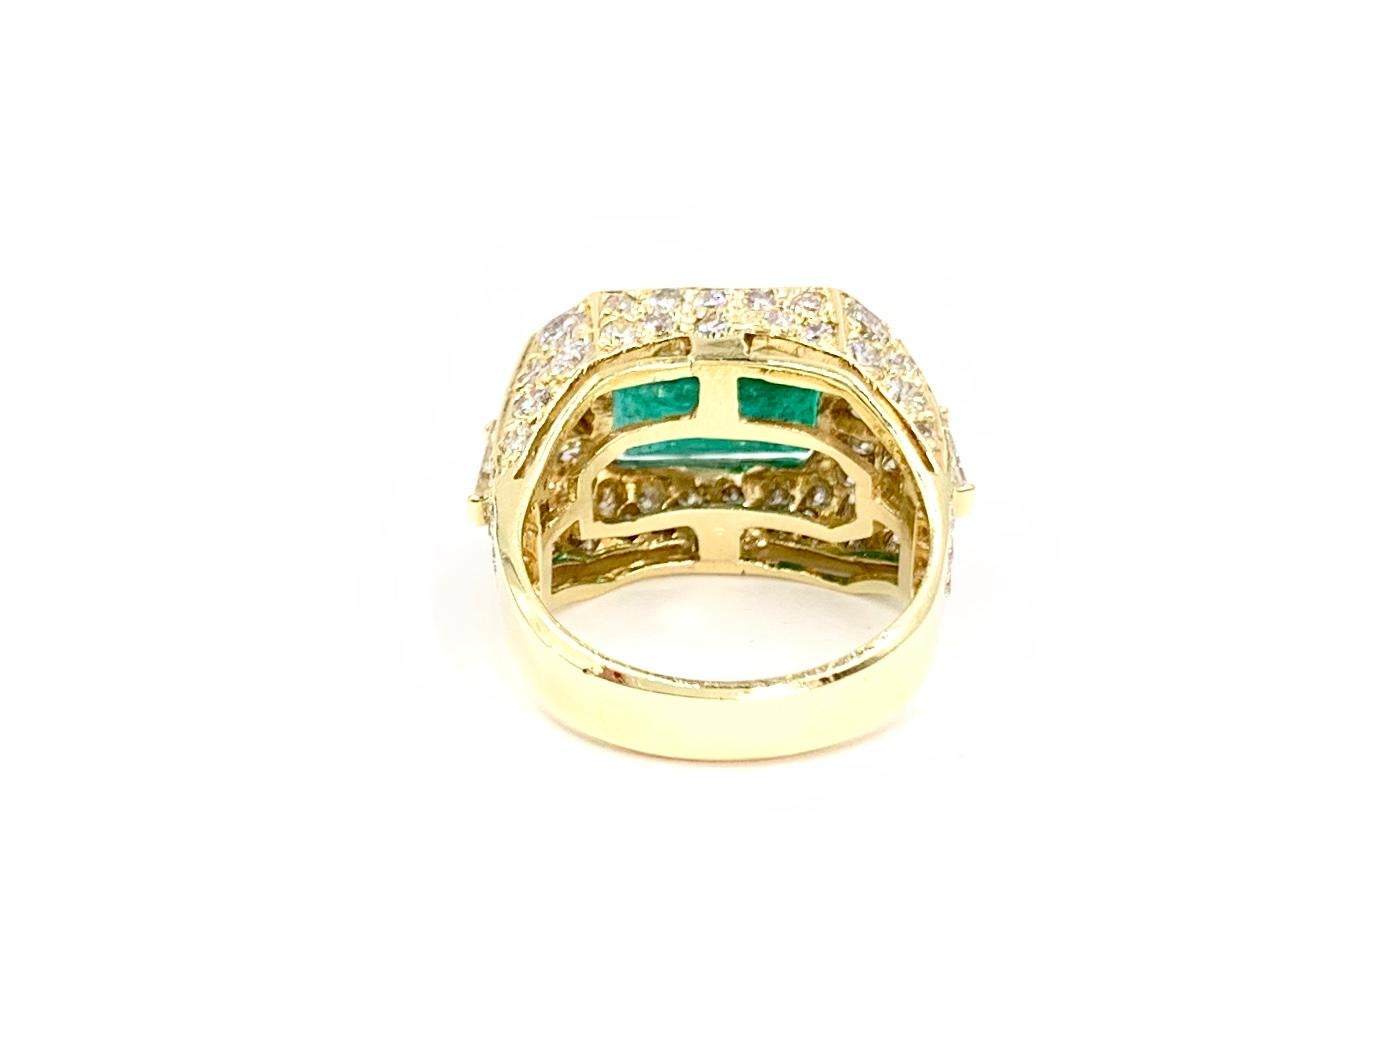 18 Karat 5.87 Carat Emerald and Diamond Cocktail Ring For Sale 1